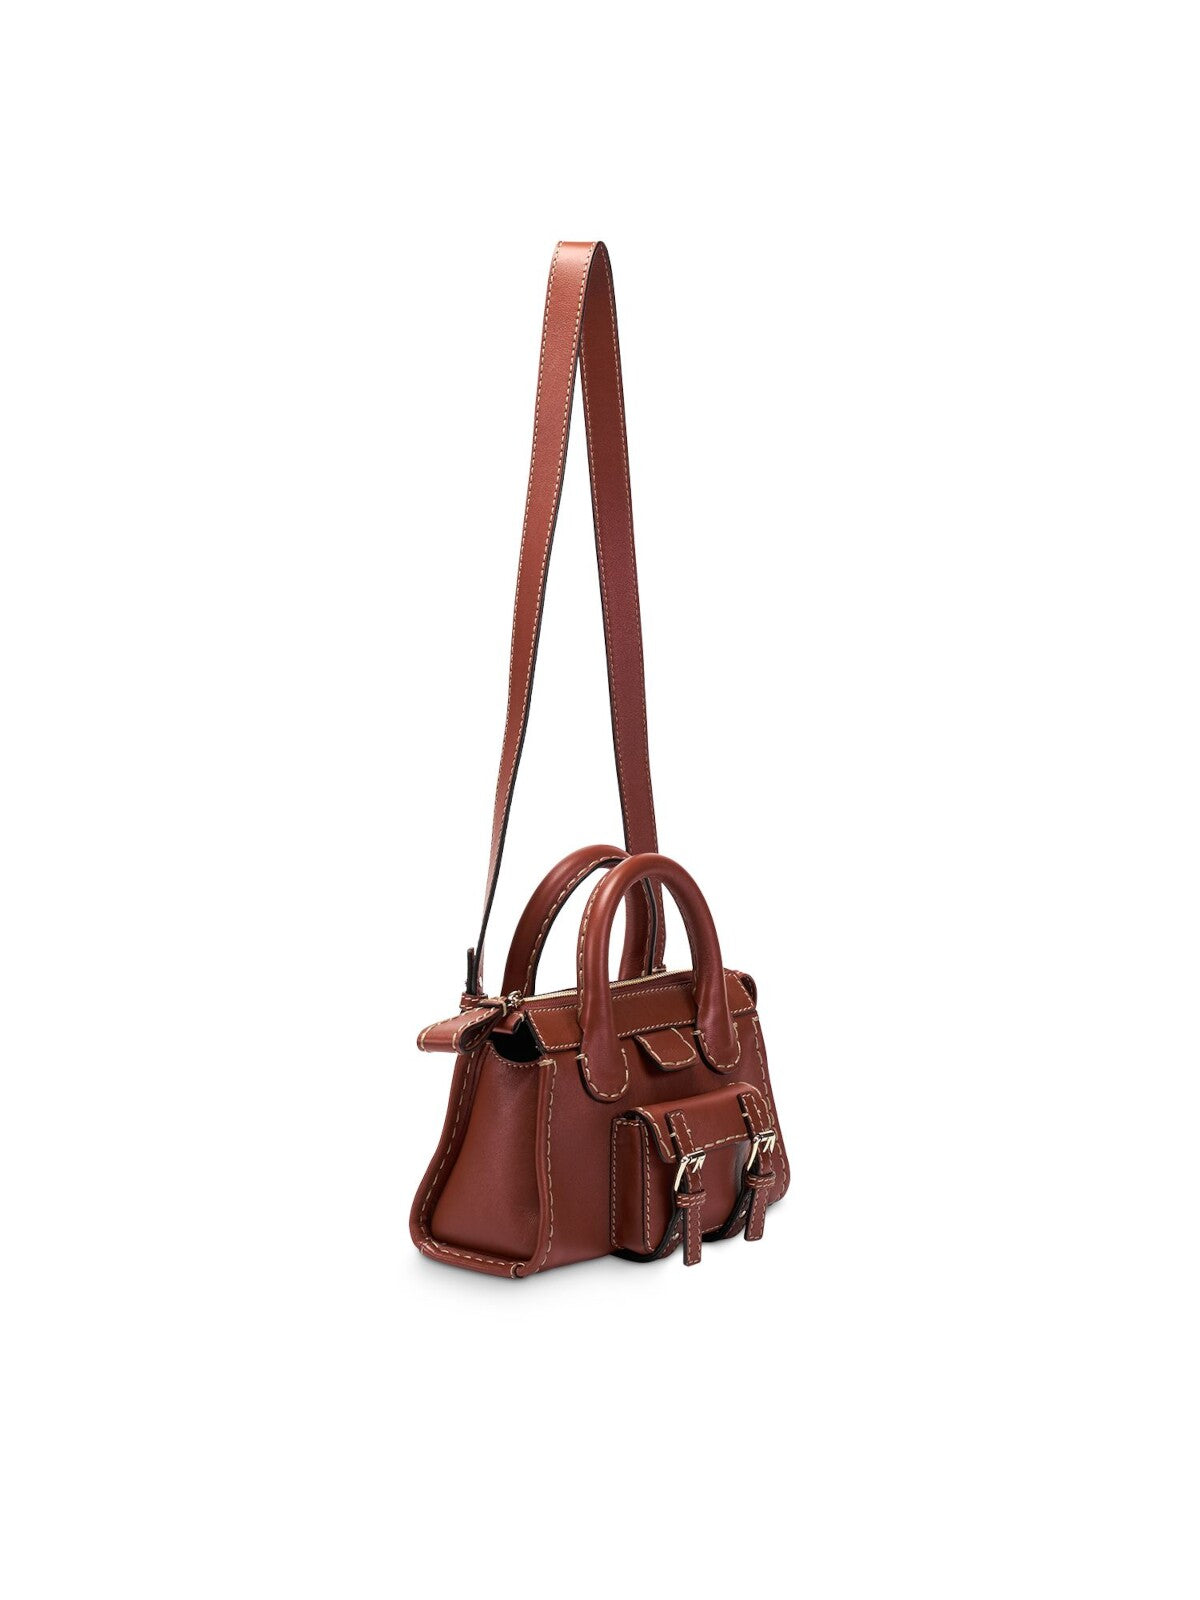 CHLOE Women's Brown Solid Double Flat Strap Satchel Handbag